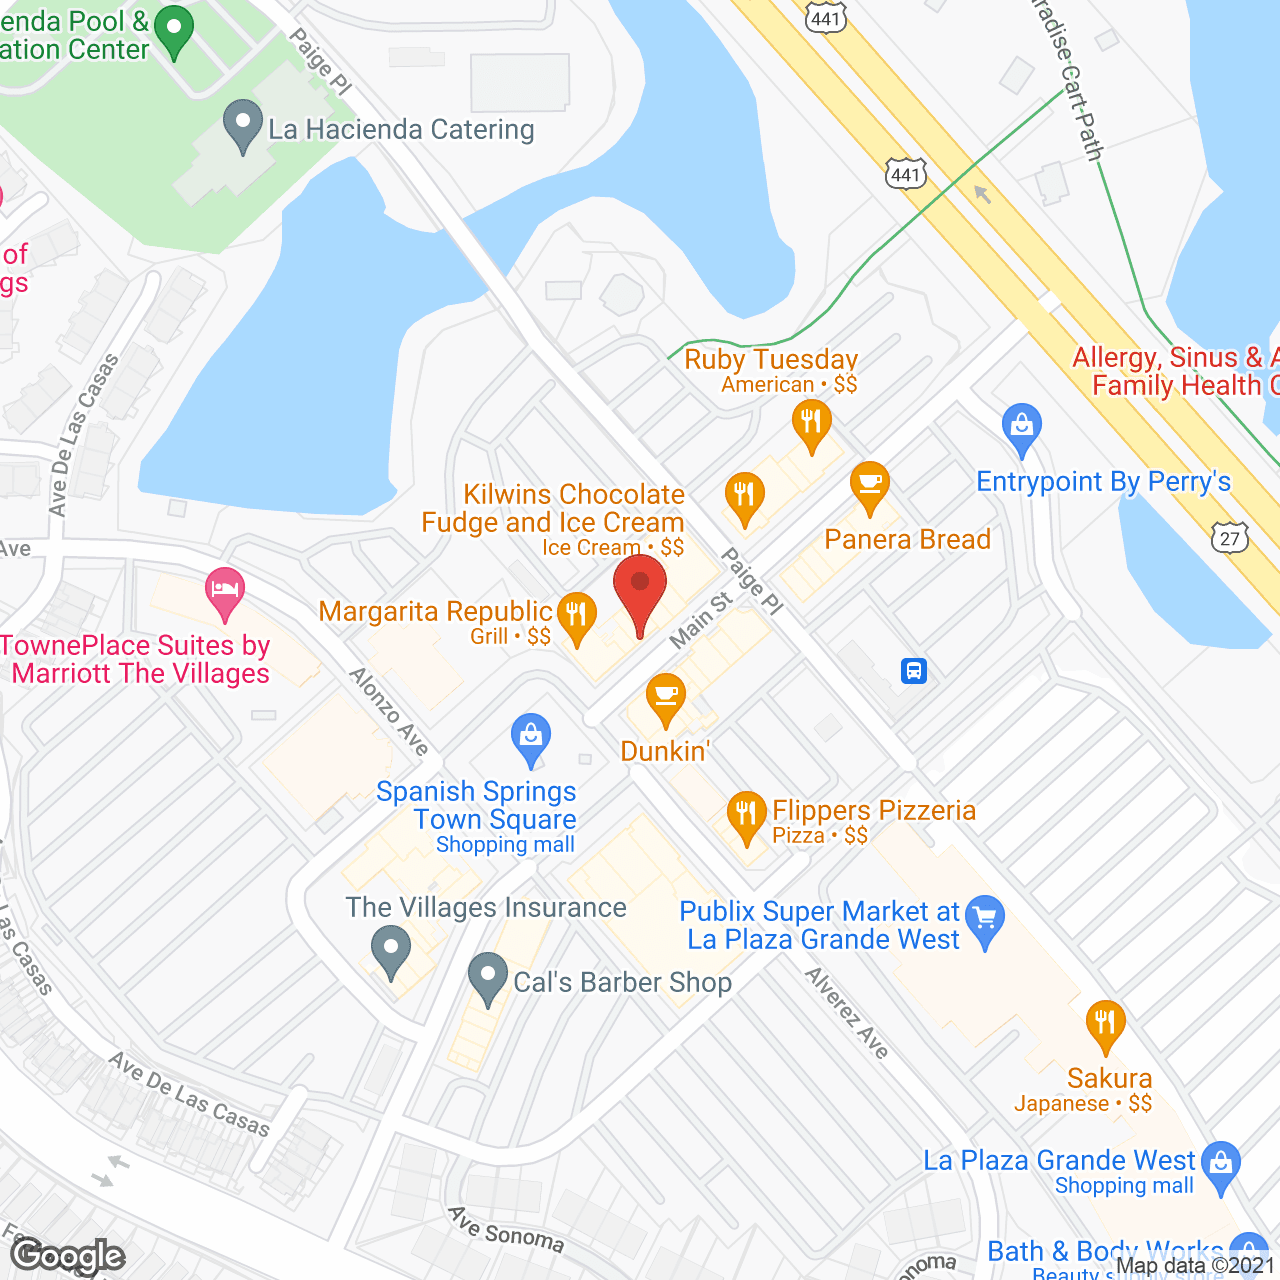 Village of Lake-Sumter Inc in google map